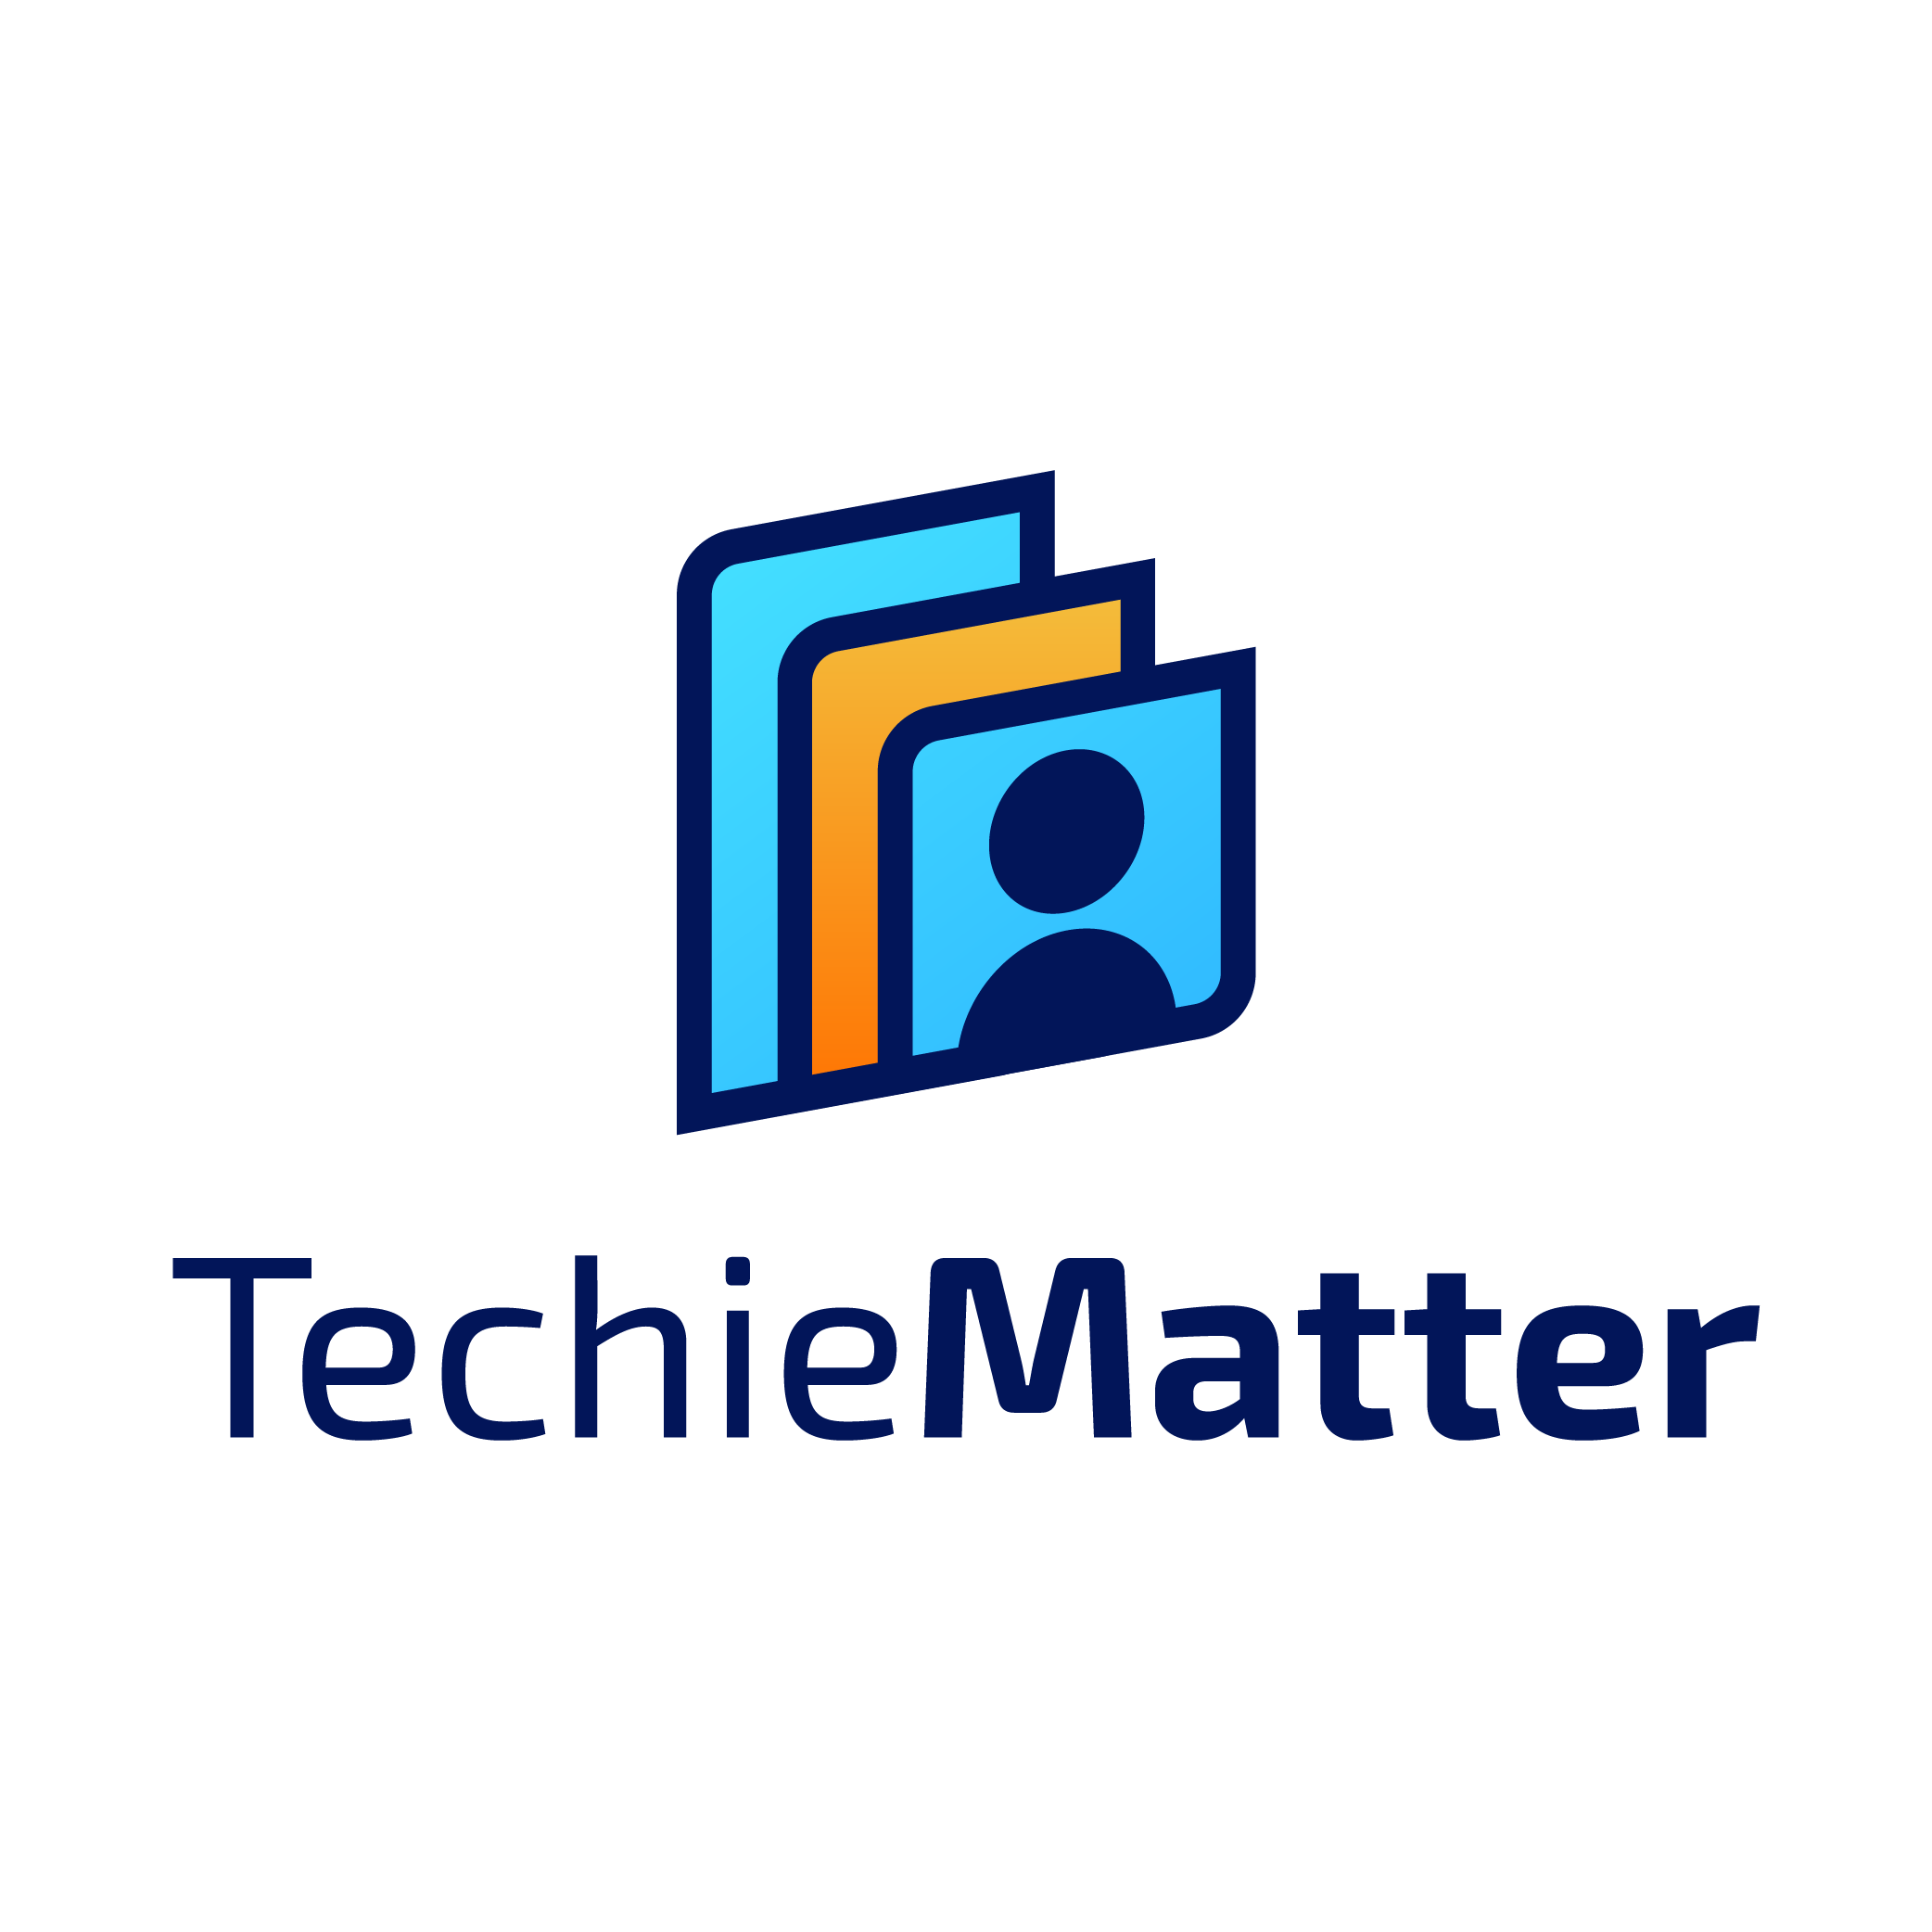 TechieMatter